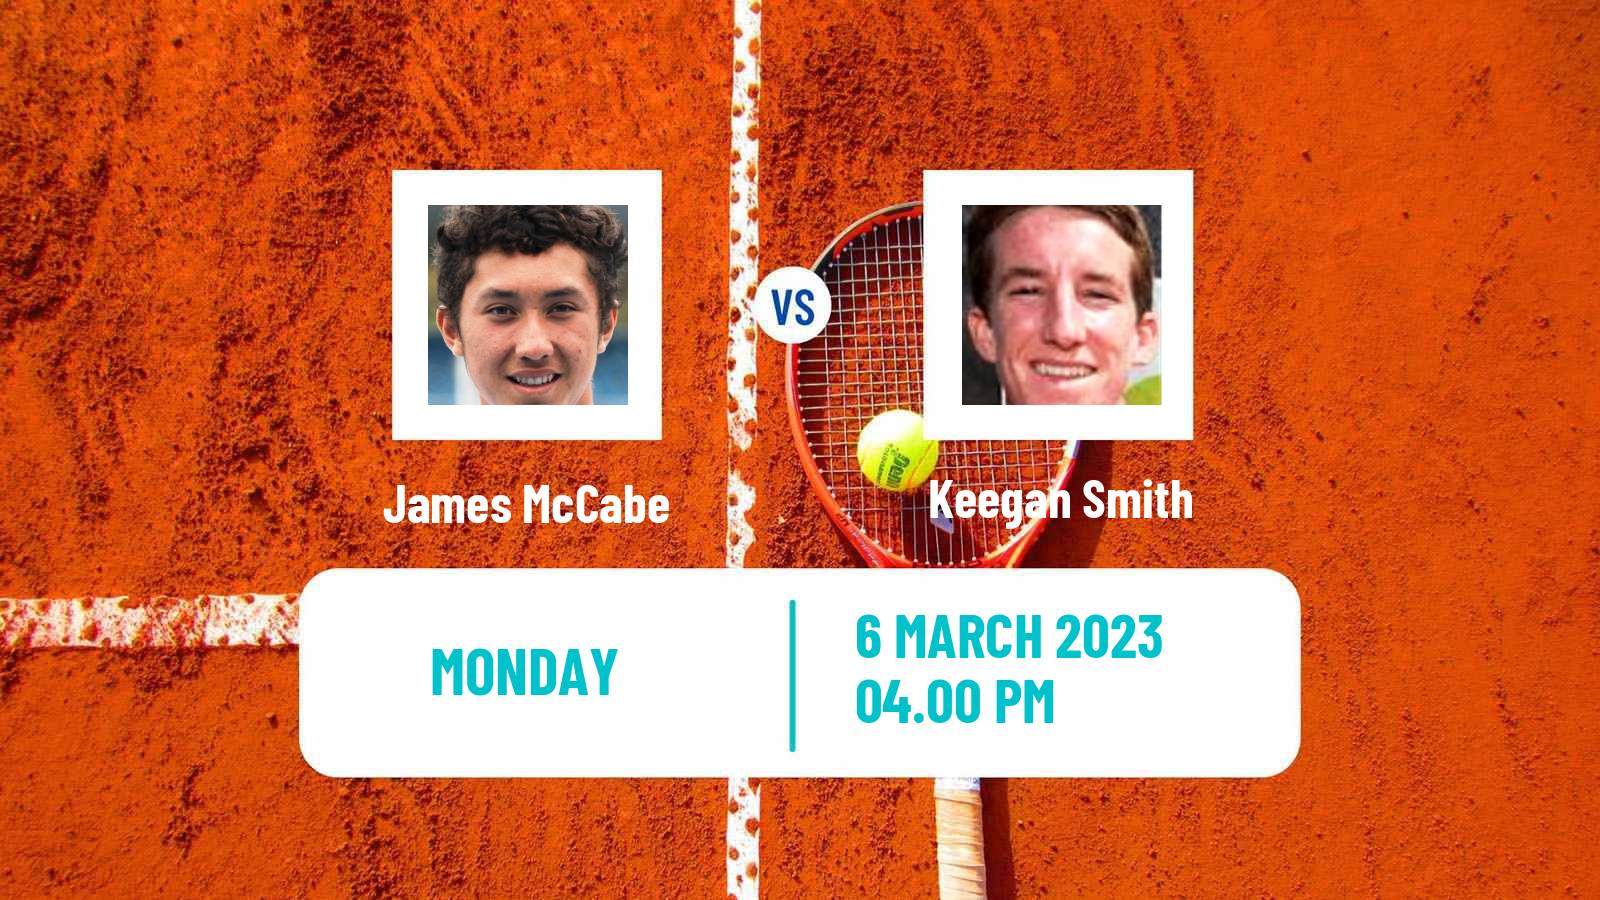 Tennis ATP Challenger James McCabe - Keegan Smith